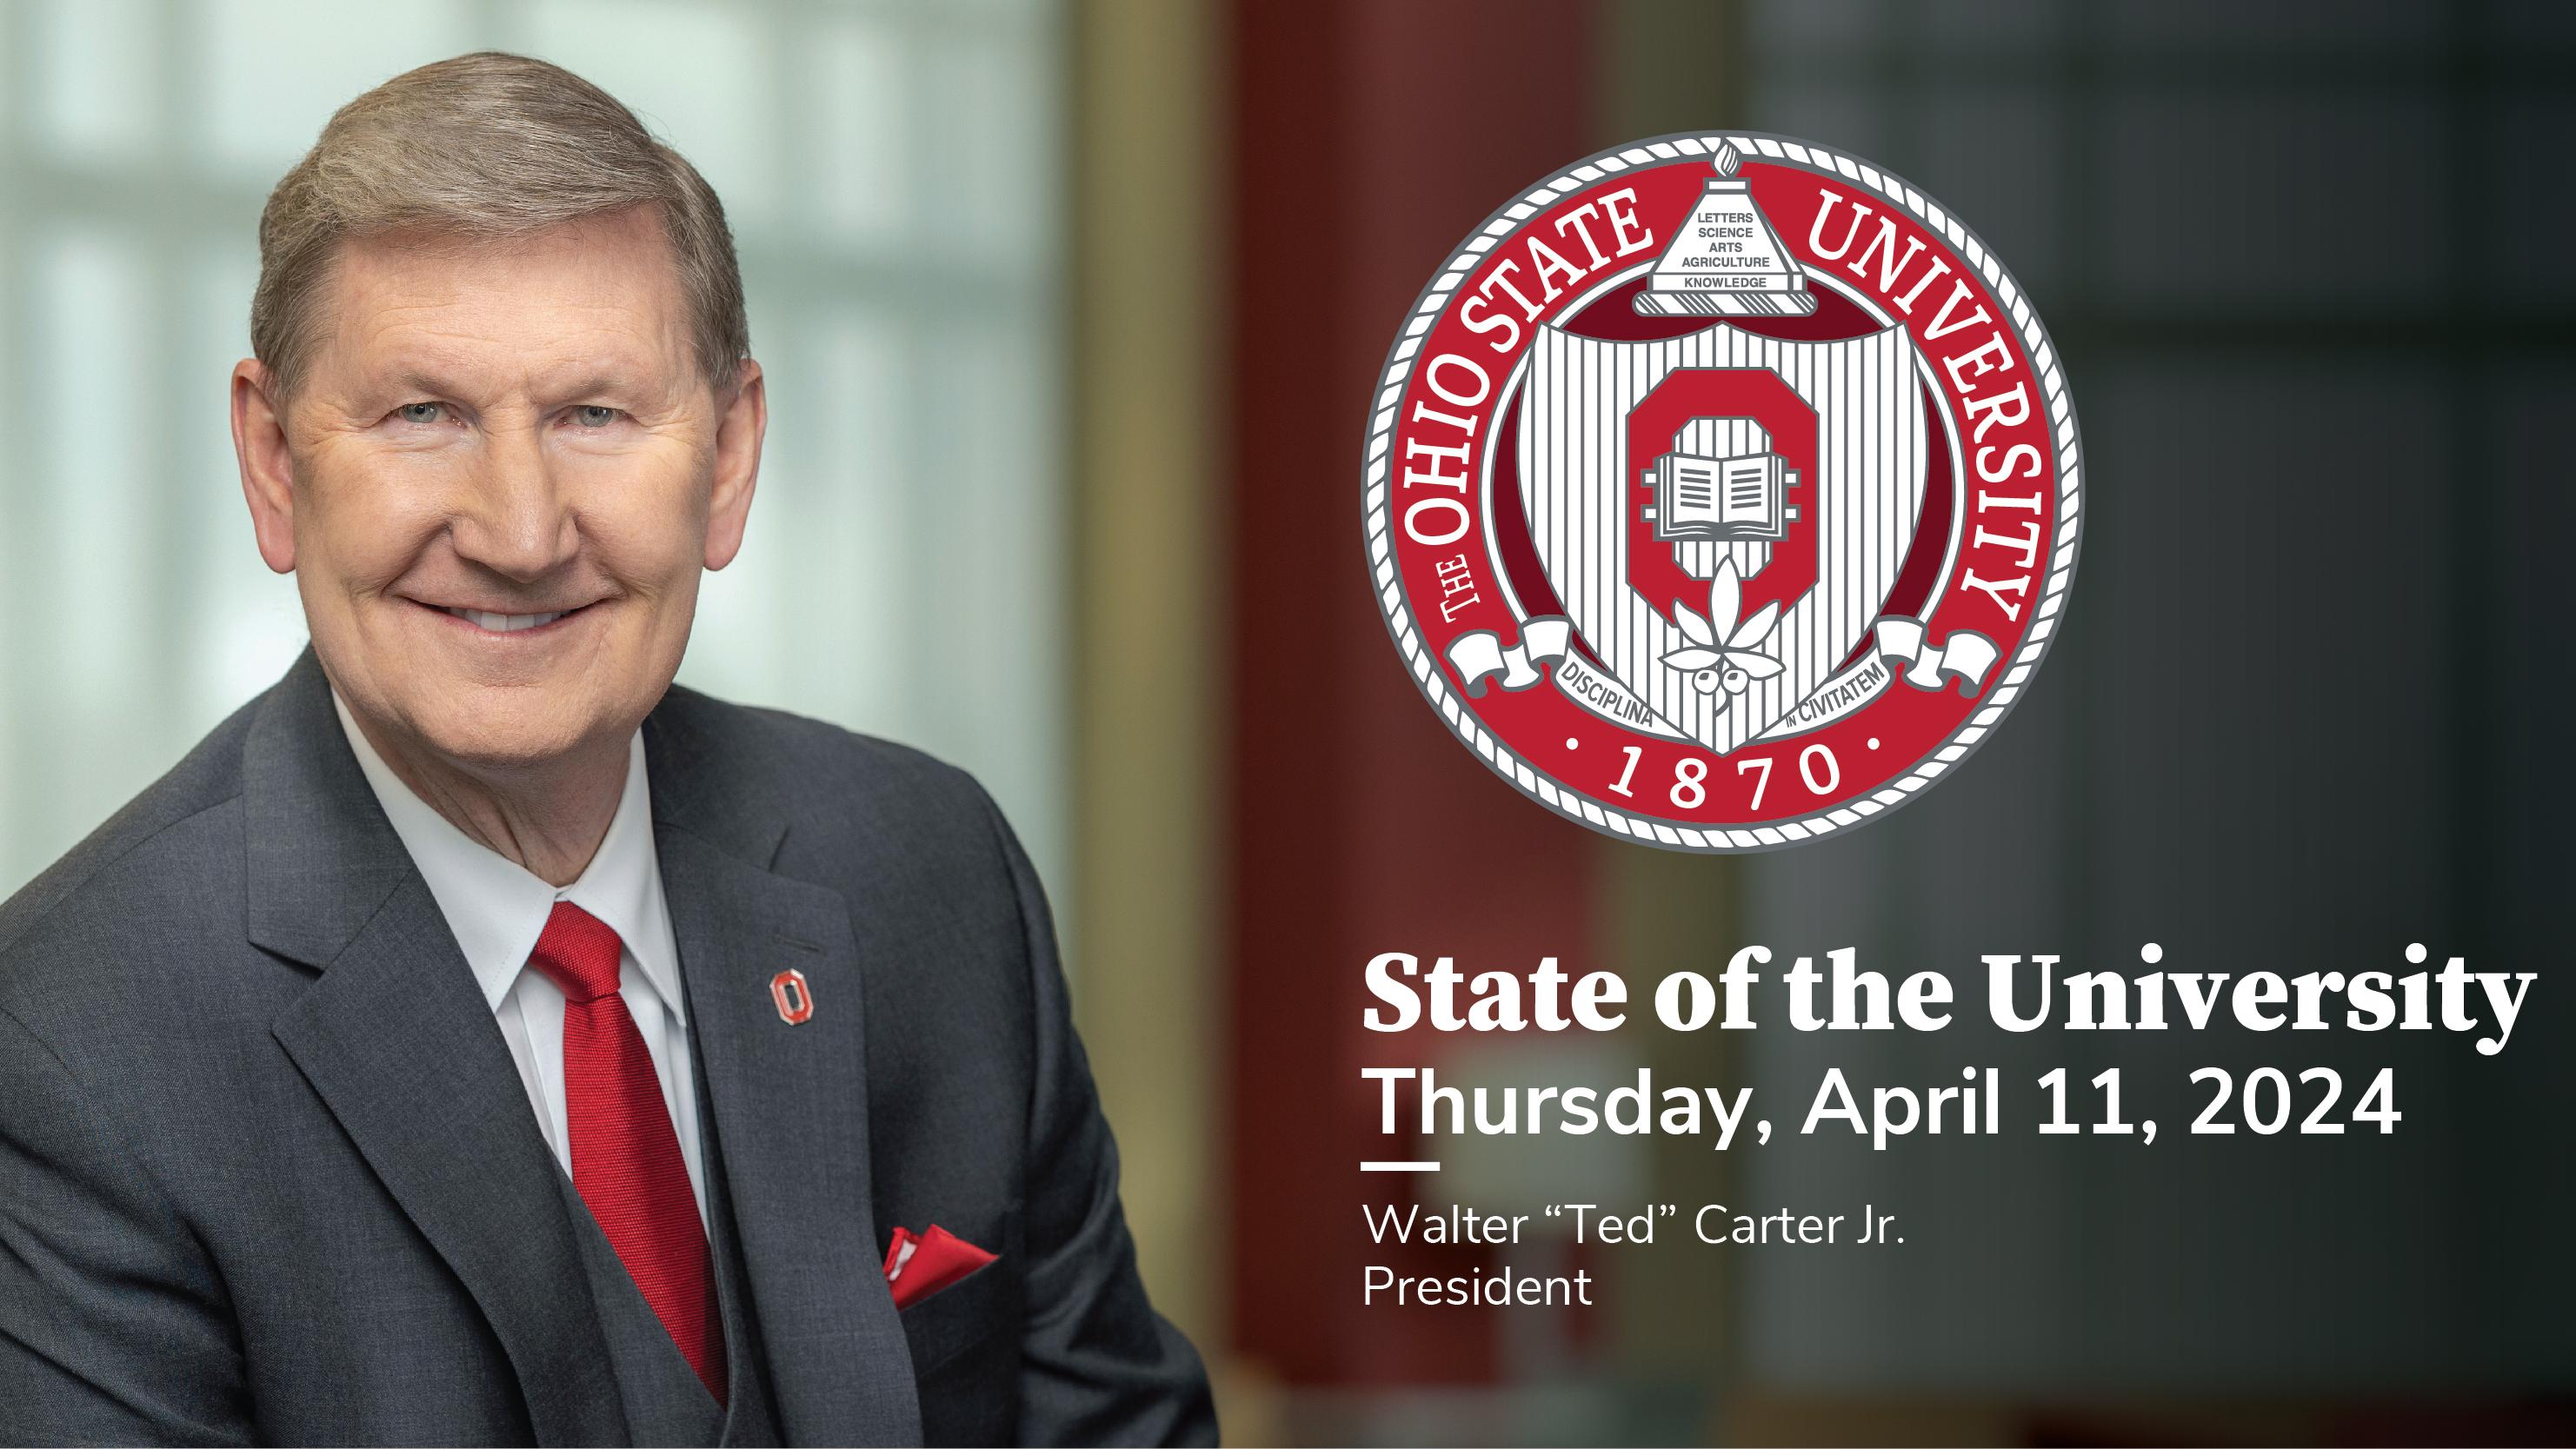 State of the University, Thursday, April 11, 2024